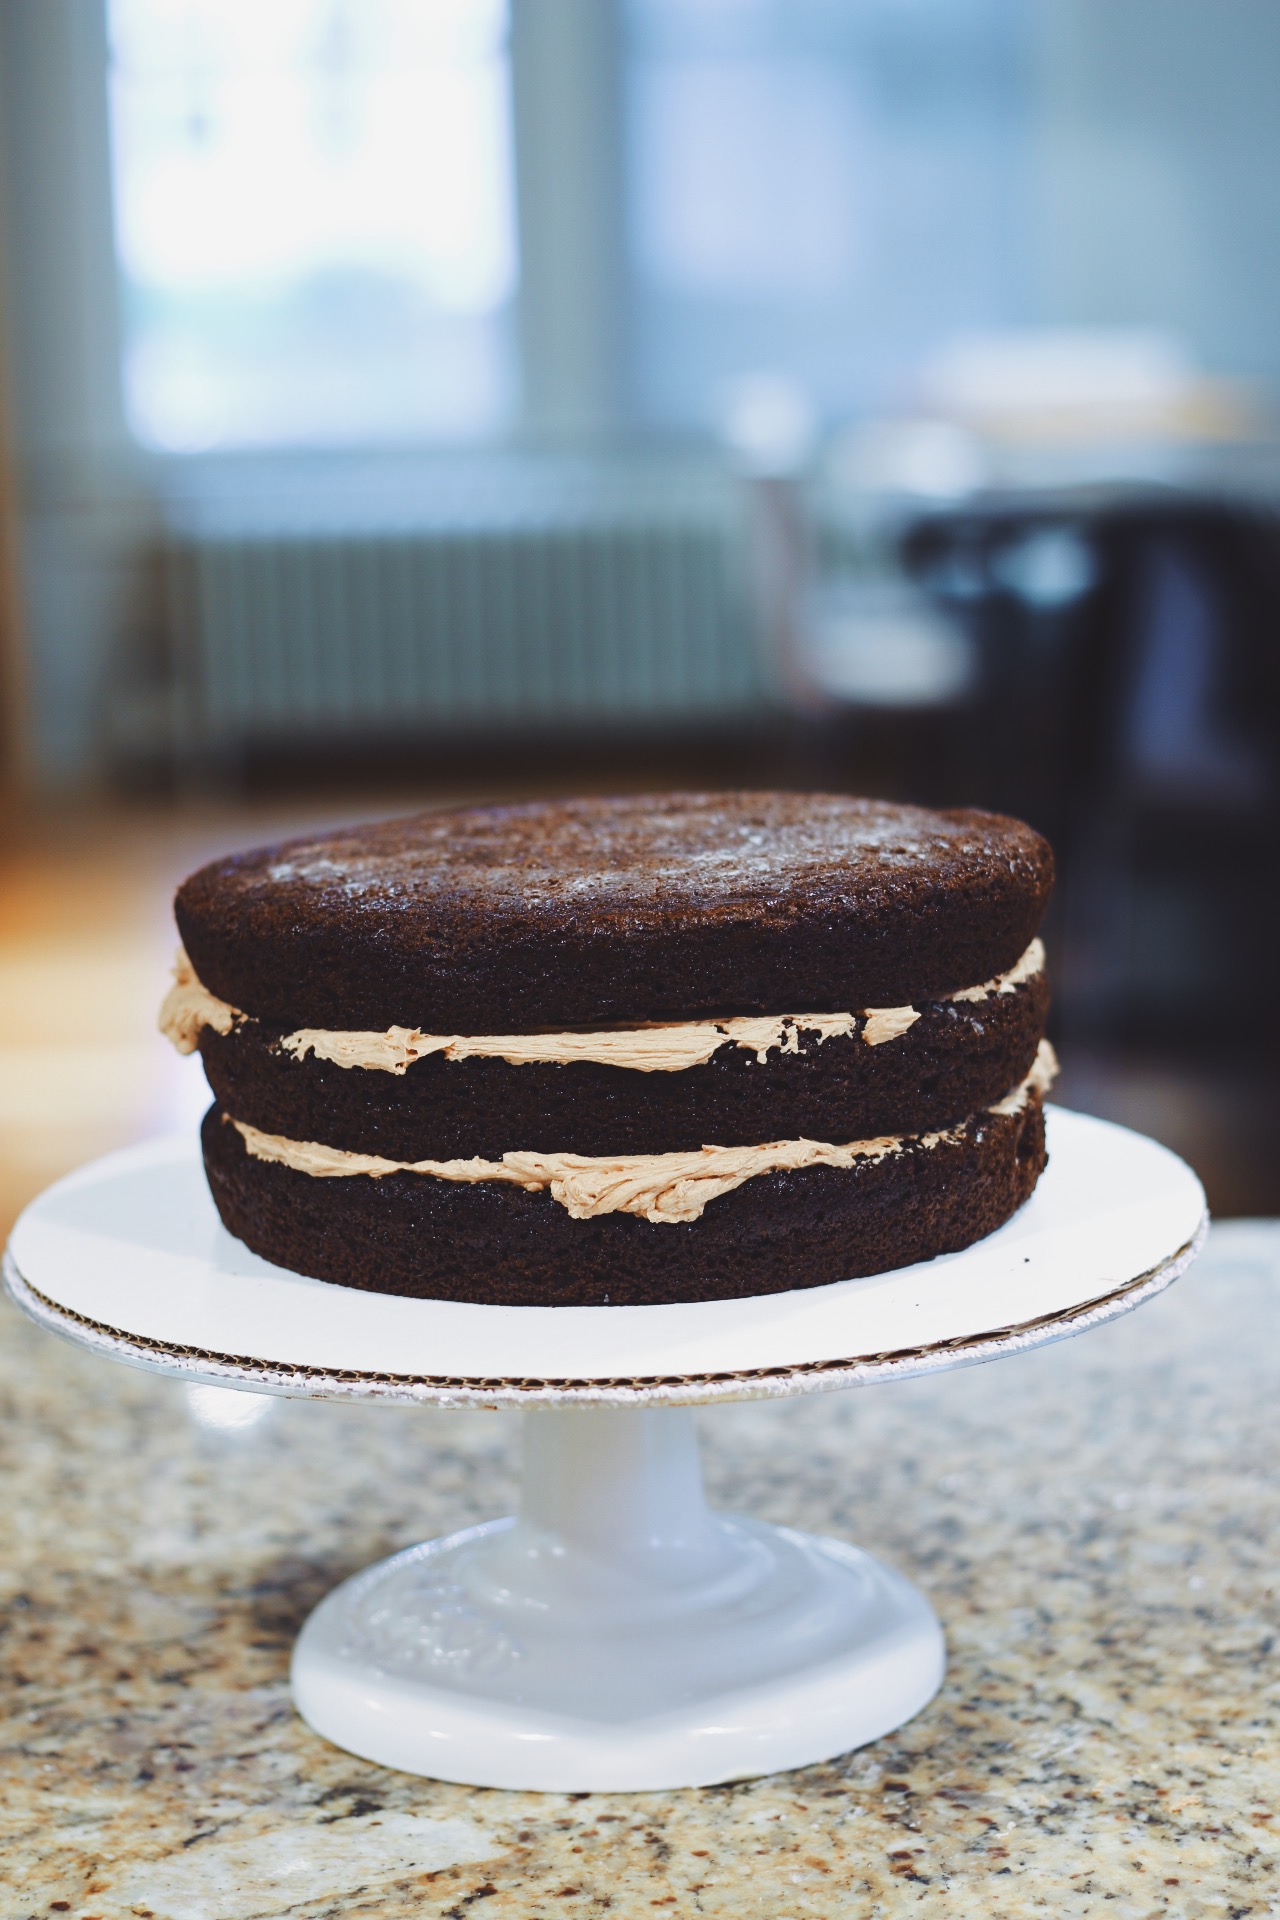 ASB Basics: 5 Best Cake Decorating Tips for Success